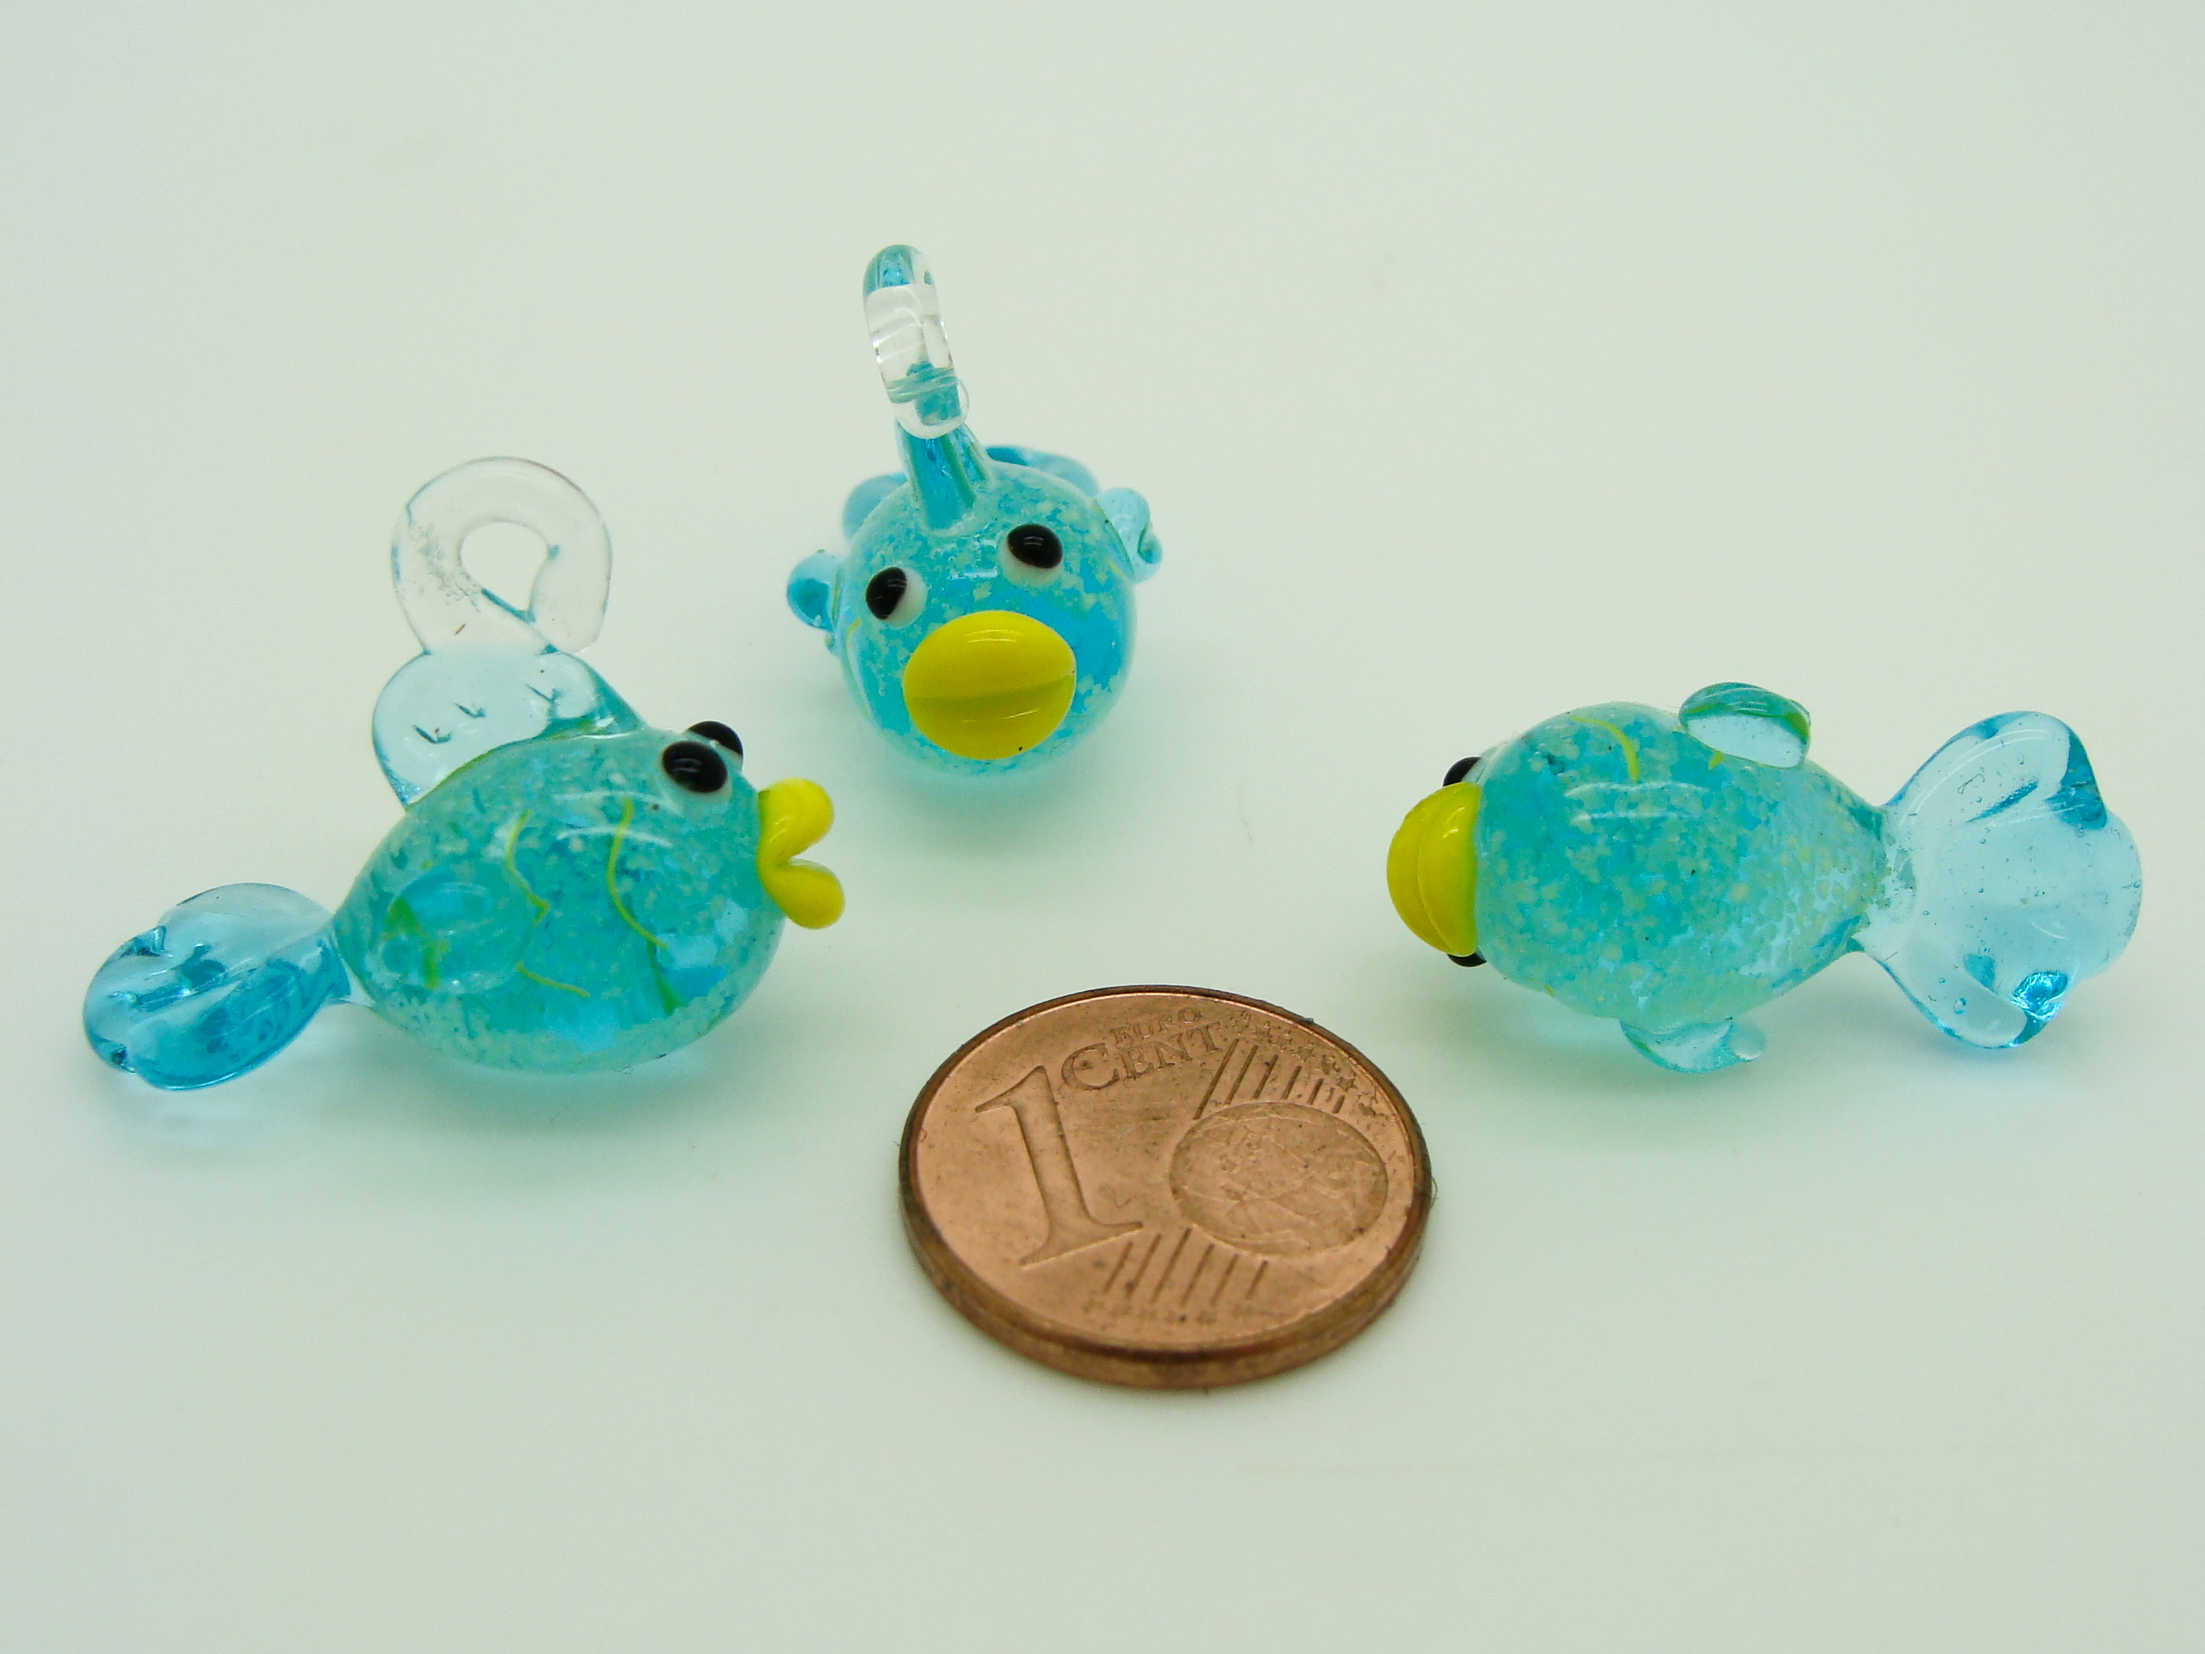 Pend-314-1 mini pendentif poisson bleu clair verre